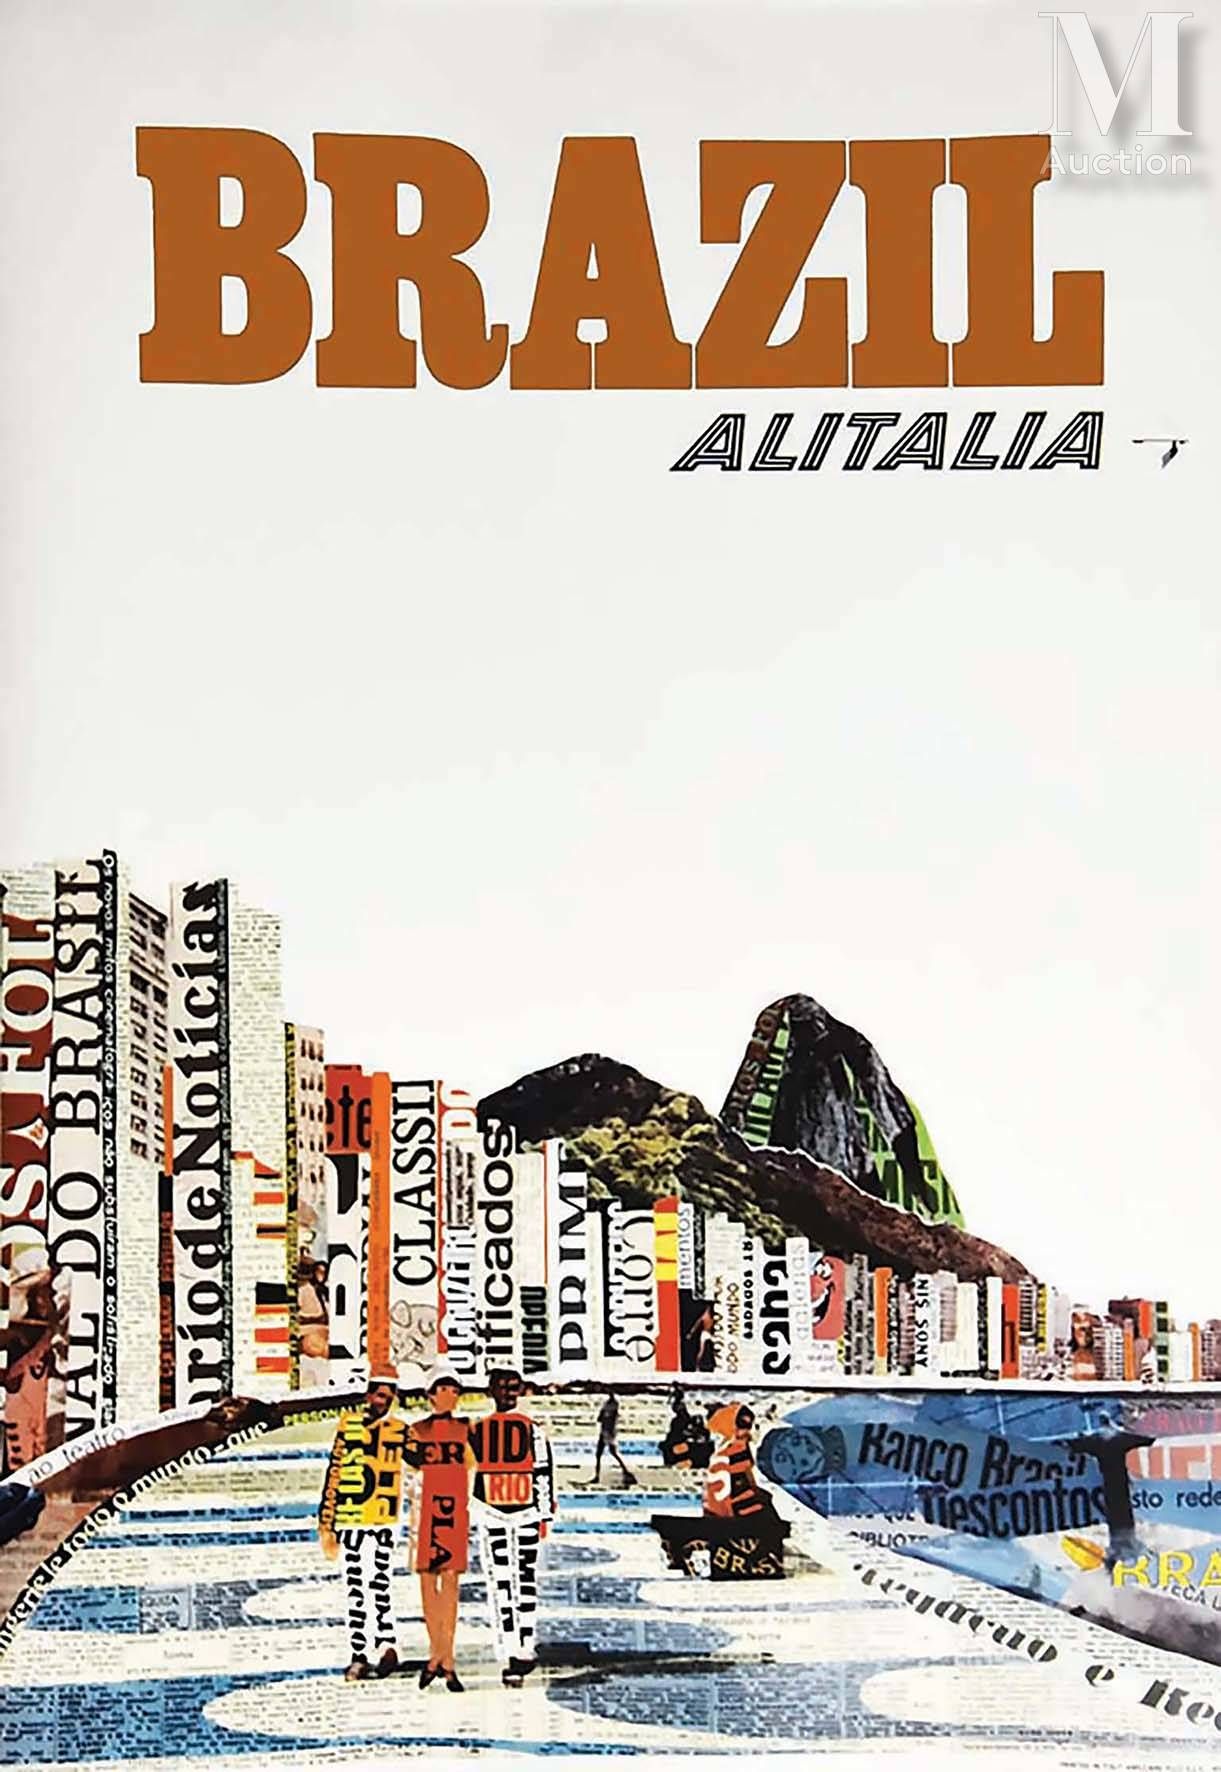 HIELSCER HARTMUT Brazil Alitalia Affiche signée par Harmut Hielscher
Brazil Alit&hellip;